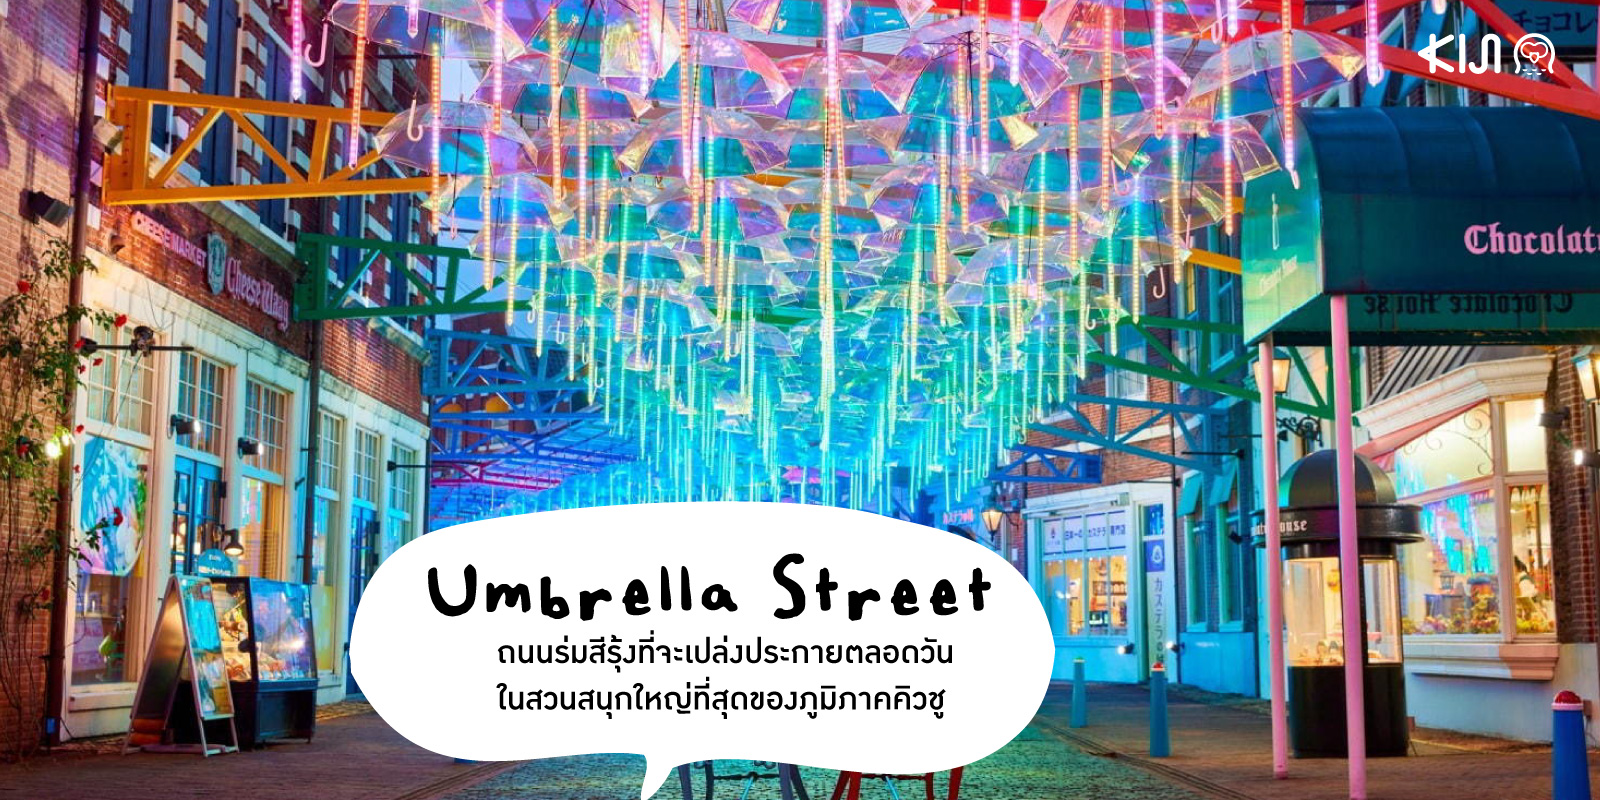 Umbrella Street ถนนร่มใน Huis Ten Bosch สวนสนุกขนาดใหญ่ จ.นางาซากิ